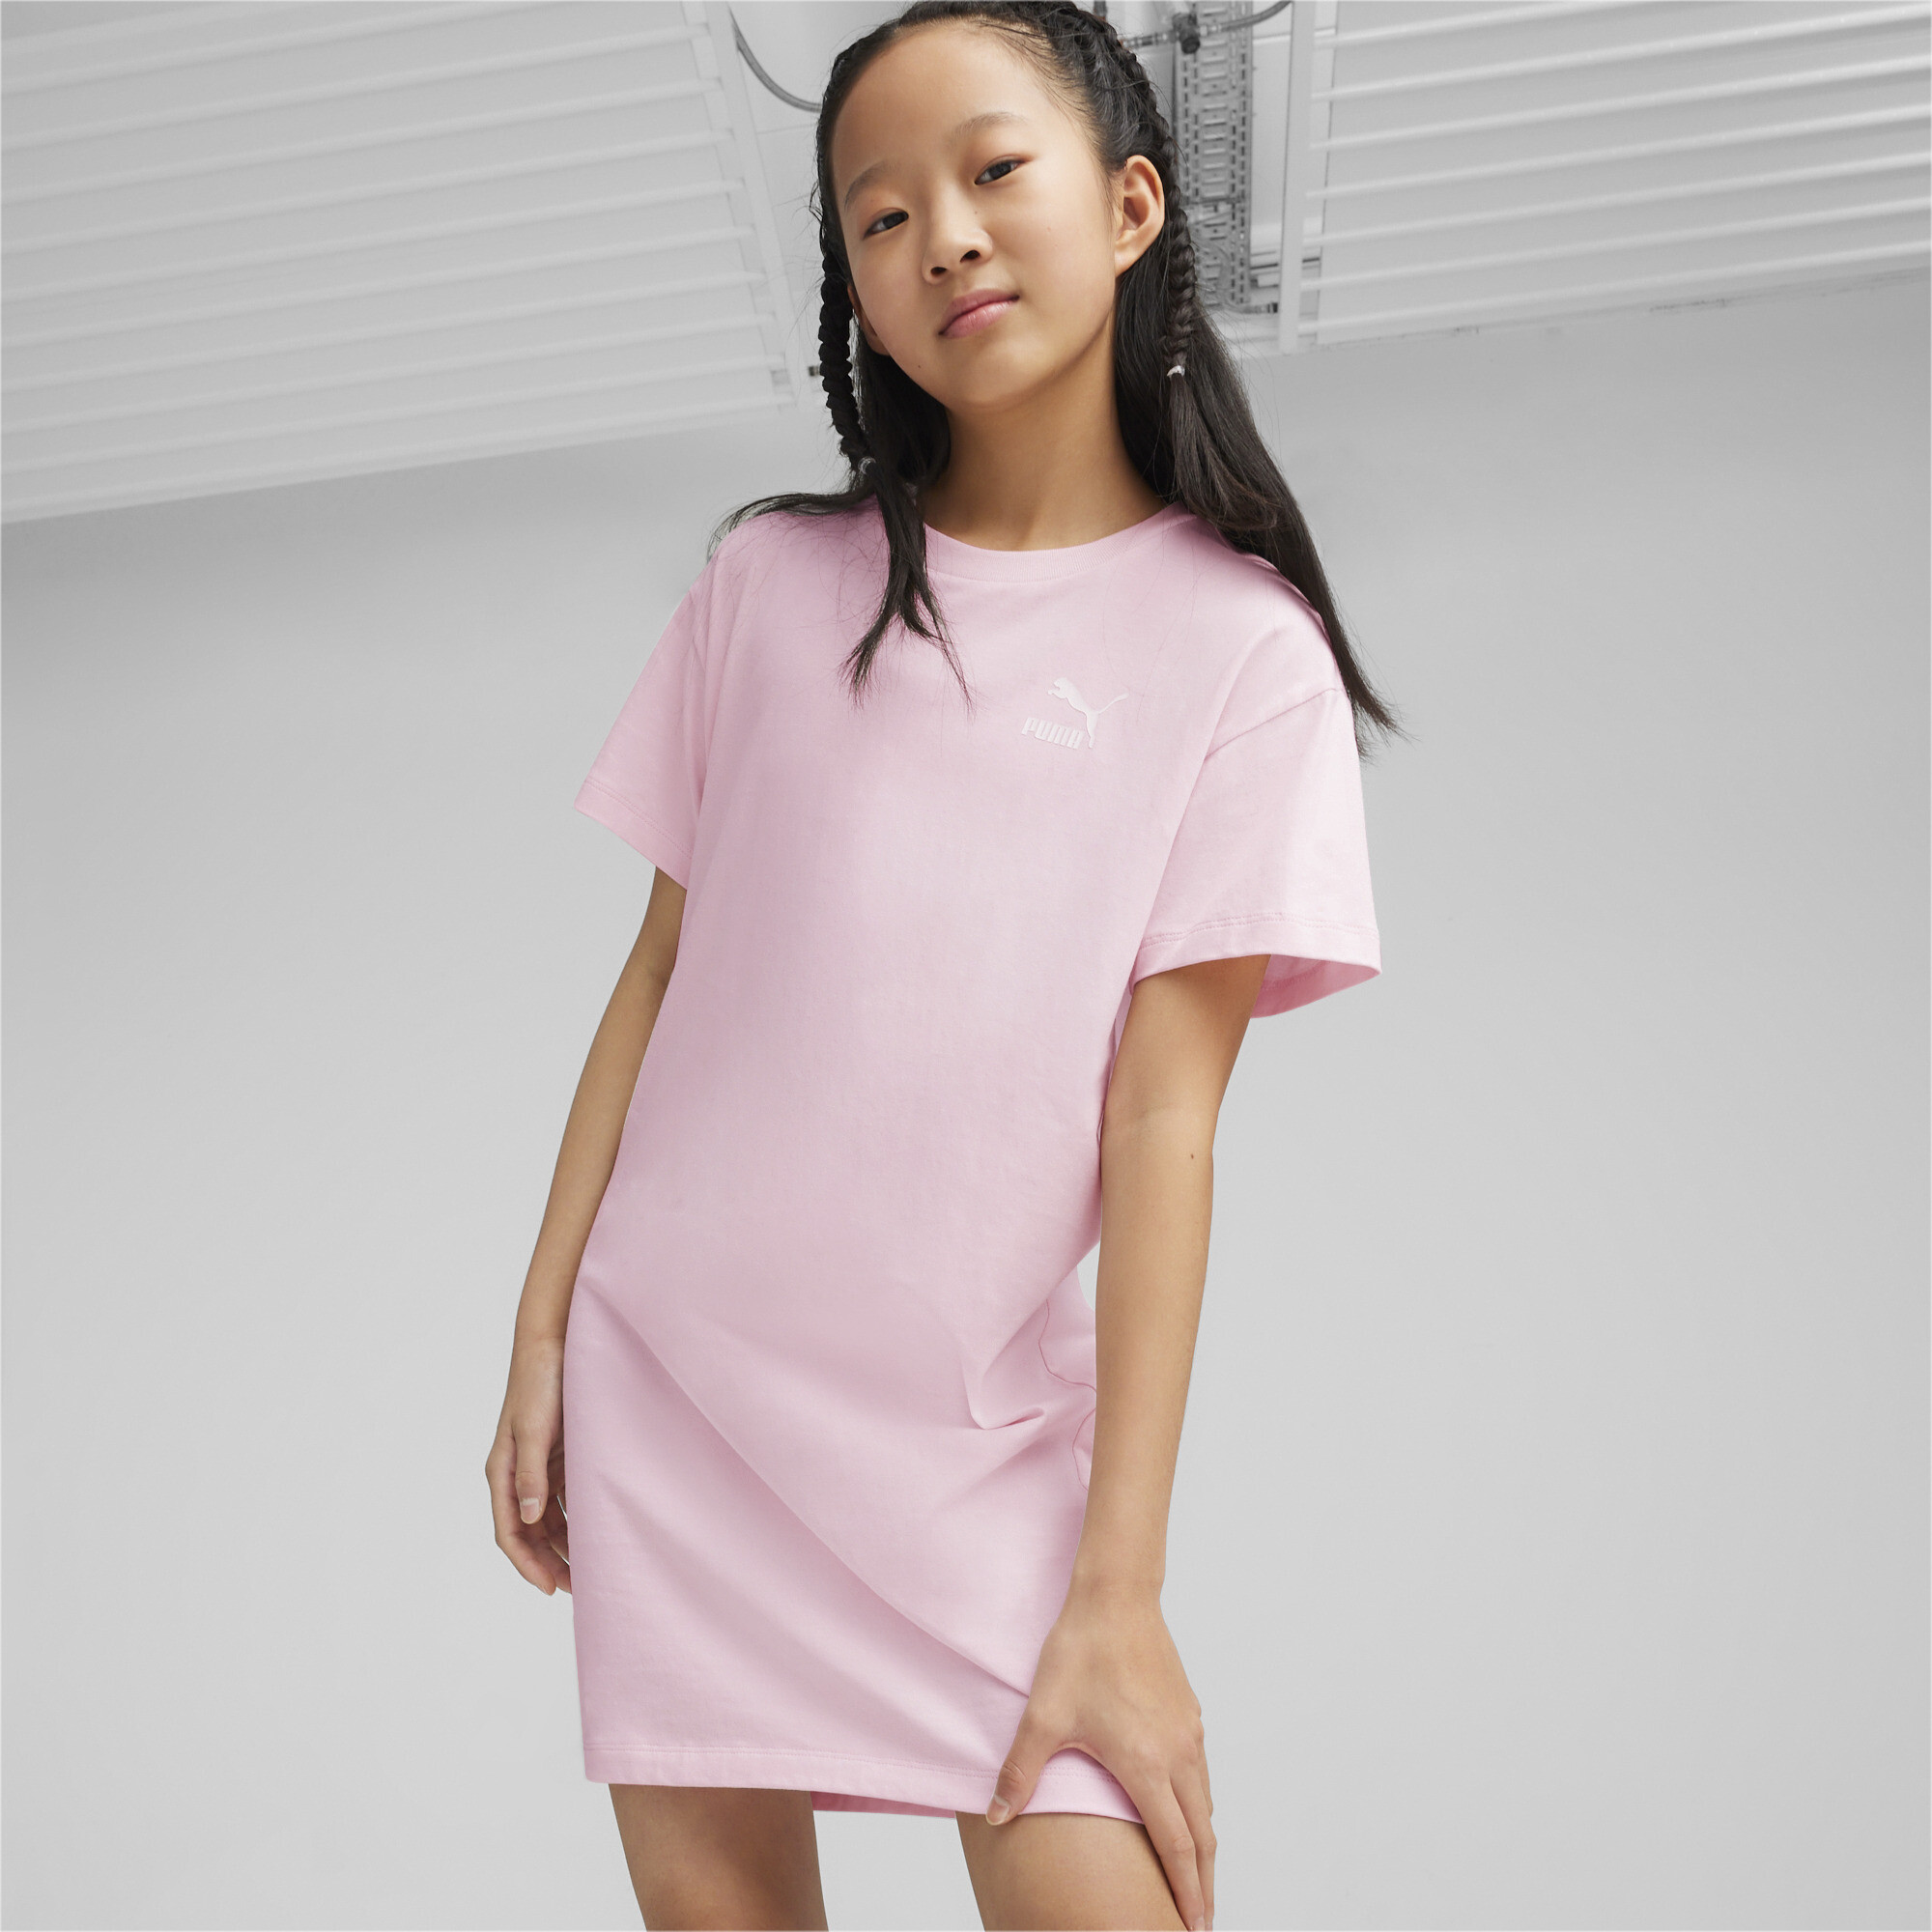 Puma BETTER CLASSICS Girl's Tee Dress, Pink, Size 15-16Y, Shop